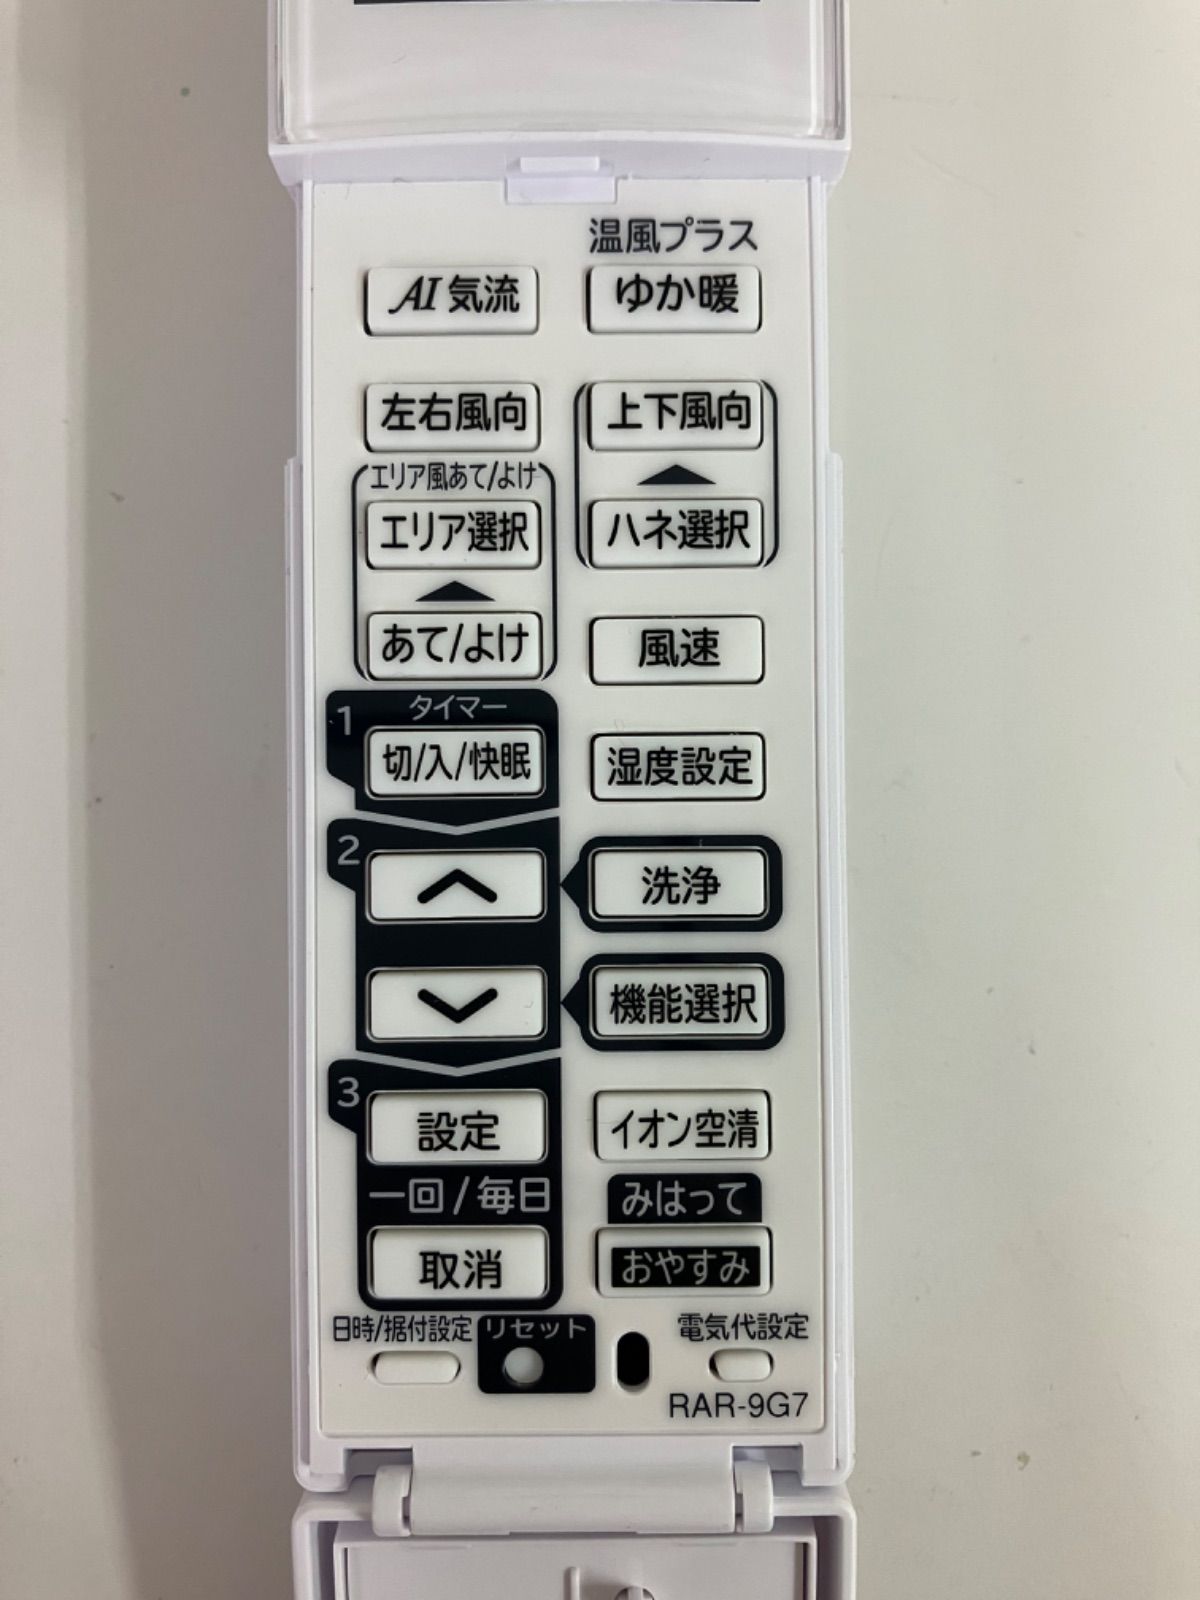 HITACHI 日立 エアコンリモコン RAR-9G7 展示品 動作確認済み - メルカリ